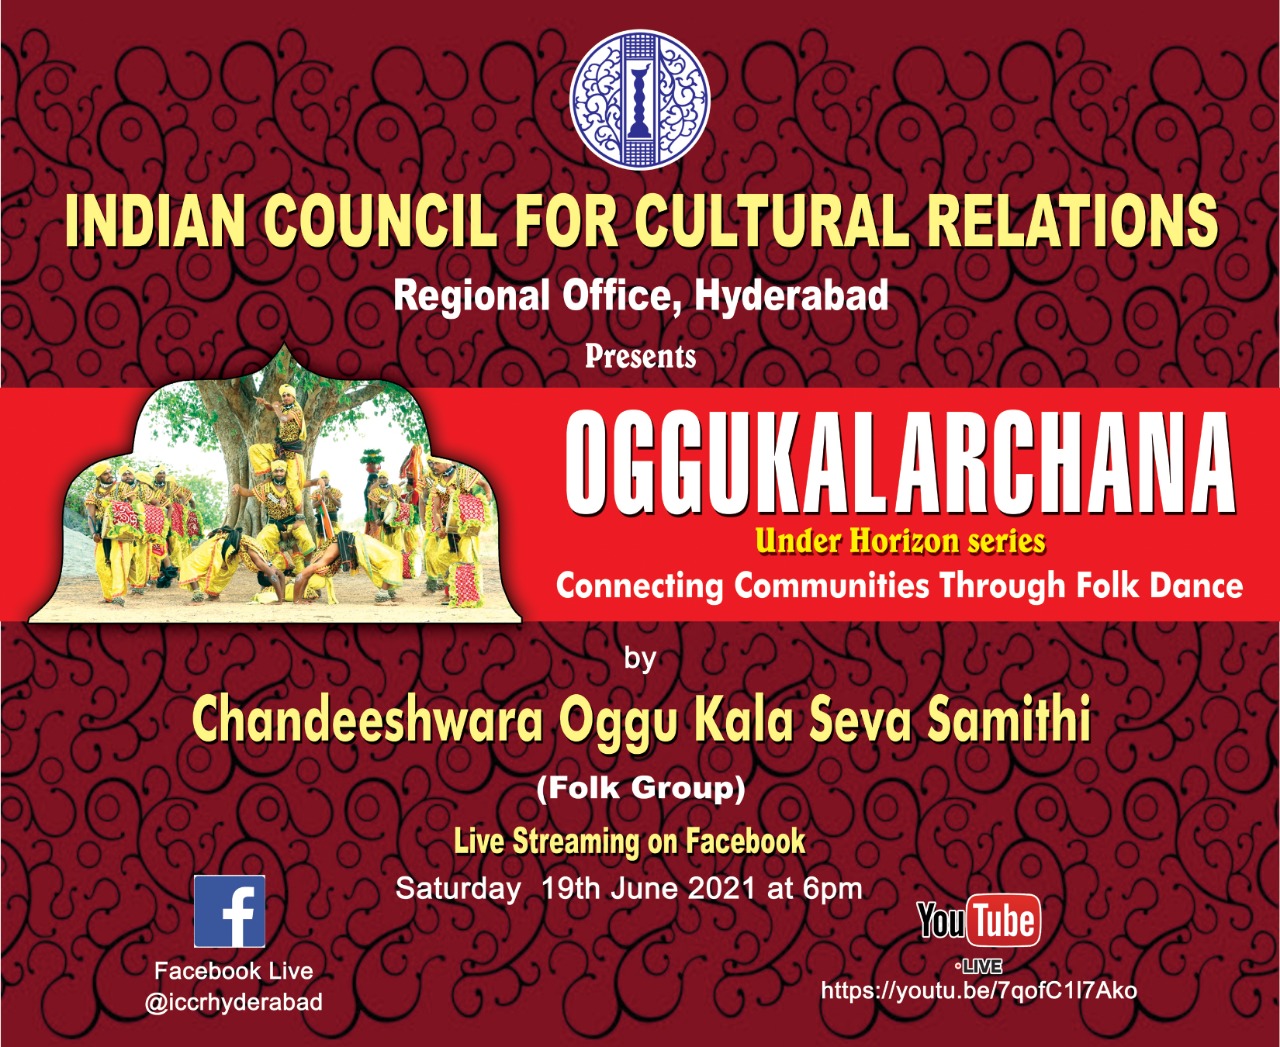  E-invite for an Online programme OGGUKALARCHANA - A virtual Folk Dance performance by Chandeeshwara Oggu Kala Seva Samithi on Saturday 19th June, 2021 from 6.00 PM  onwards.